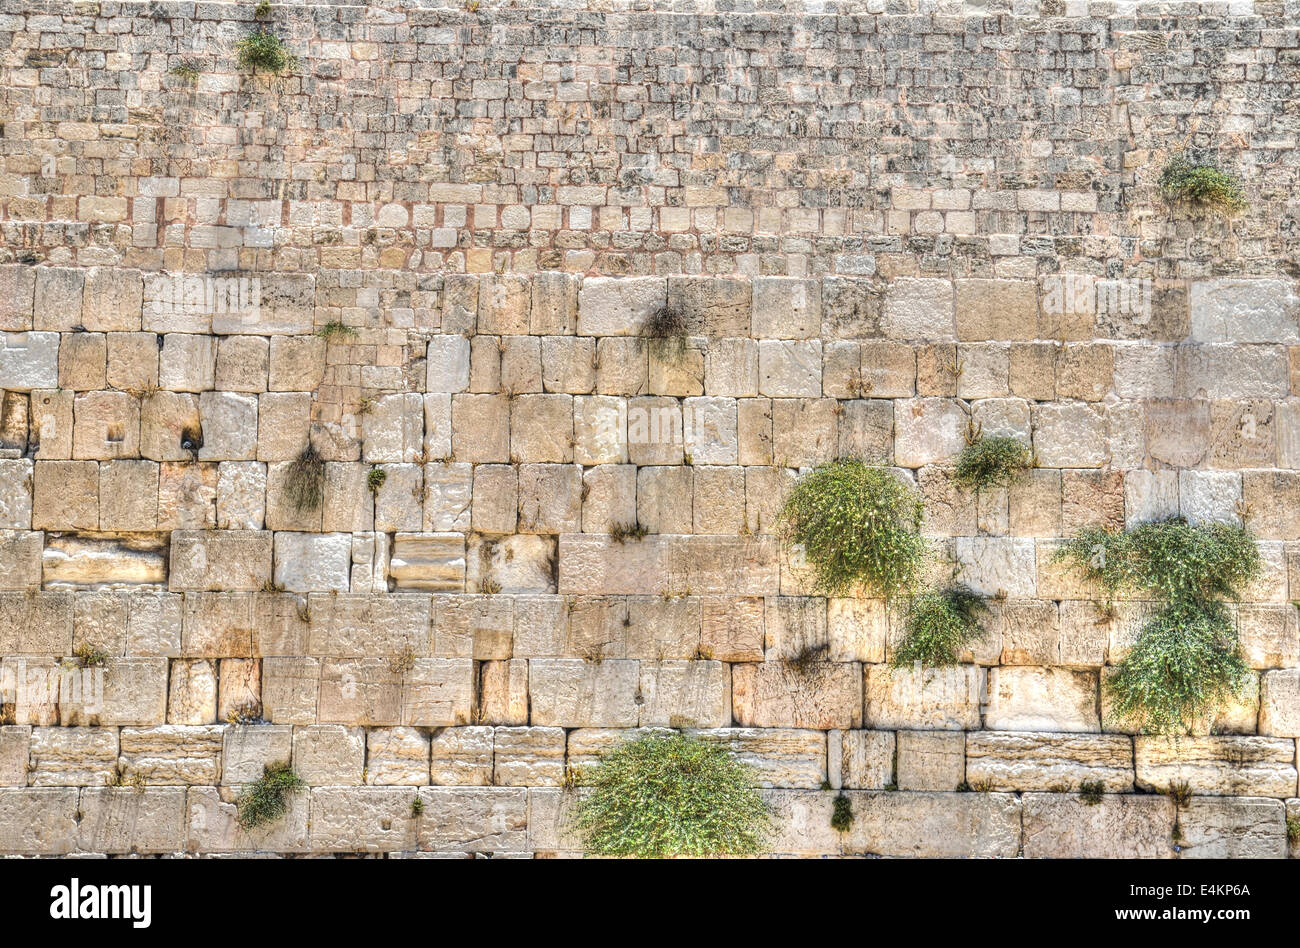 The Western Wall, Jerusalem Old City, Israel Stock Photo